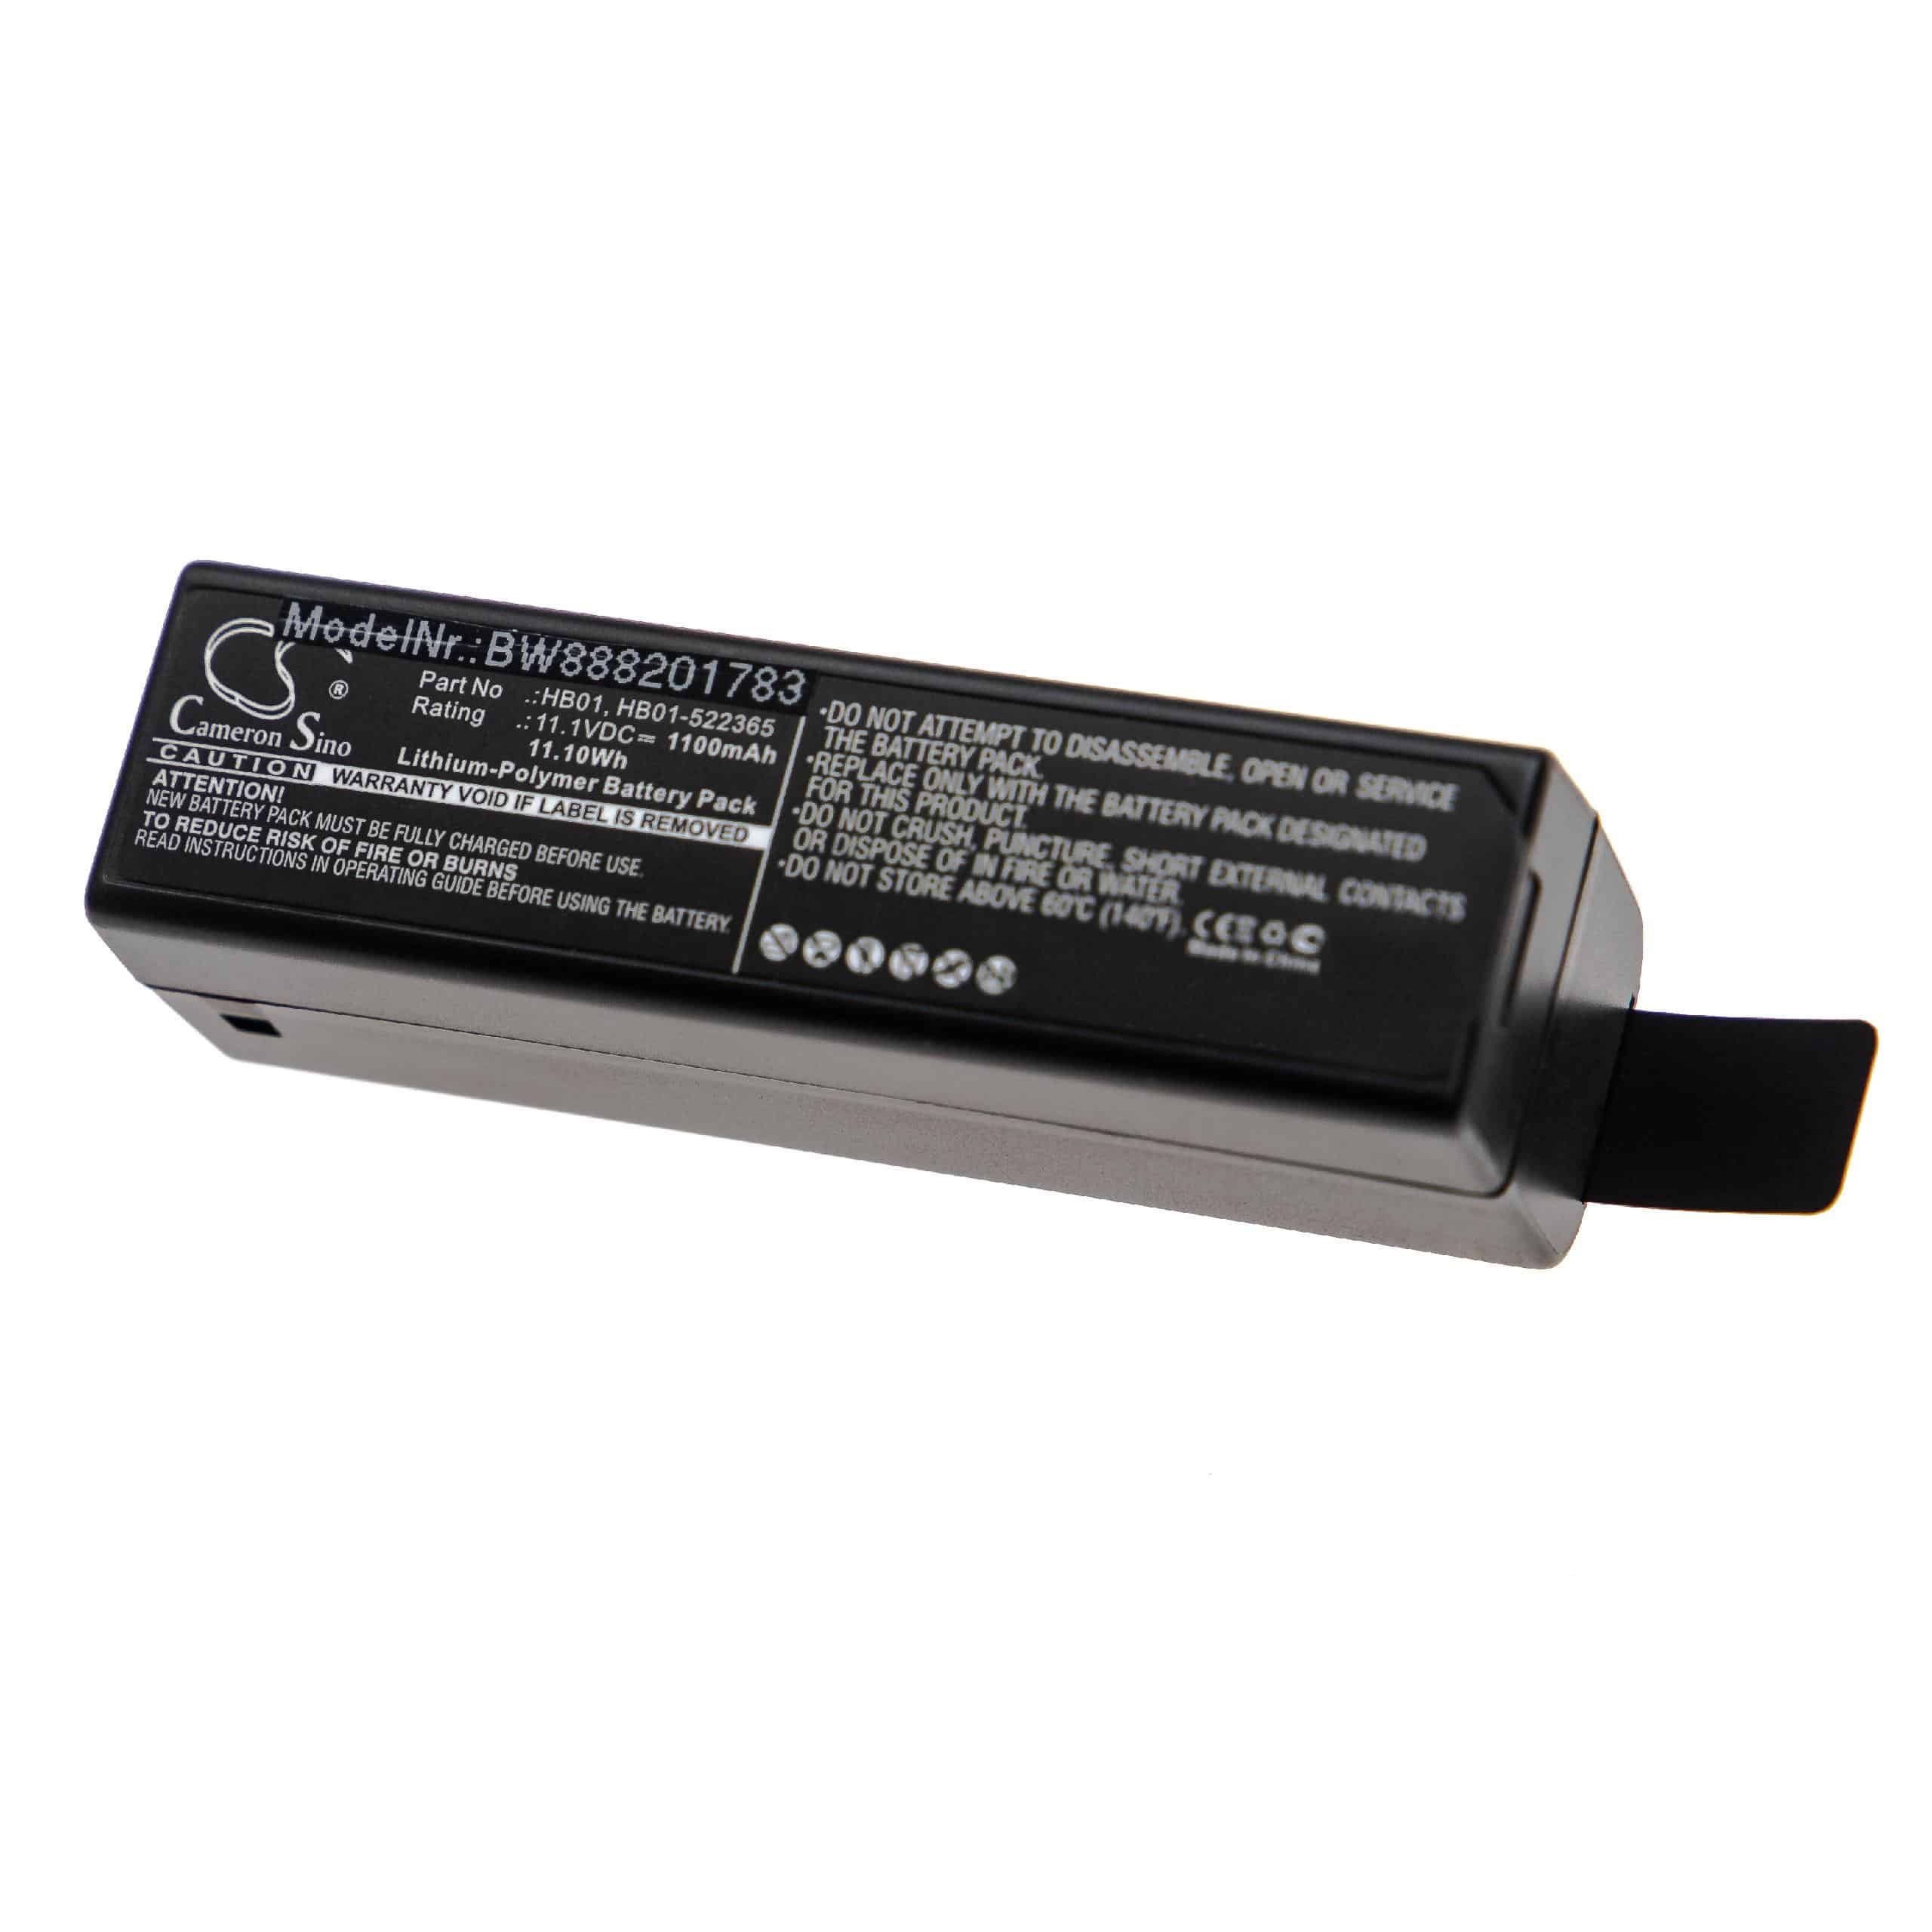 Akumulator do DSLR / aparatu cyfrowego zamiennik DJI HB01, HB01-522365 - 1100 mAh 11,1 V LiPo